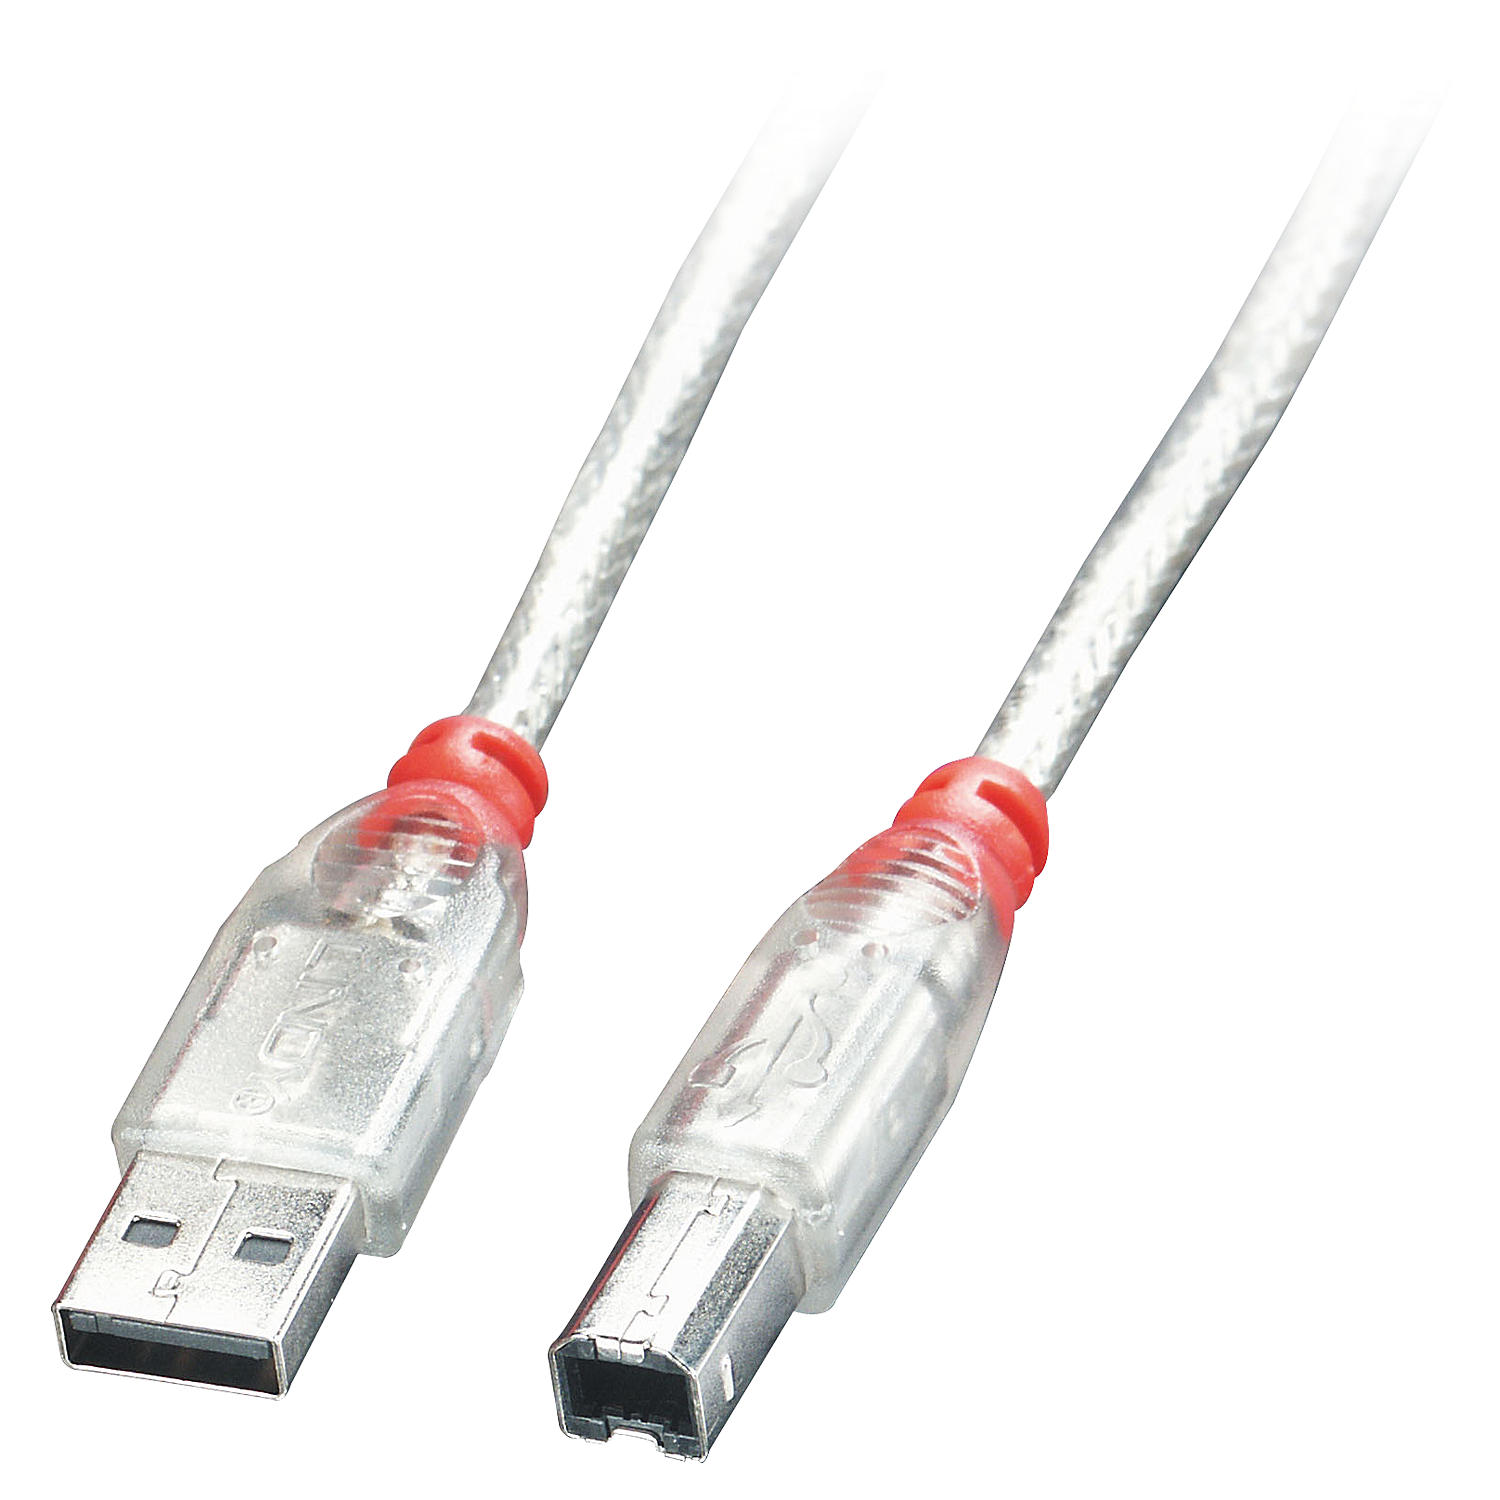 LINDY USB 2.0 Kabel Typ A/B, transparent, 0,5m  Typ A/B M/M